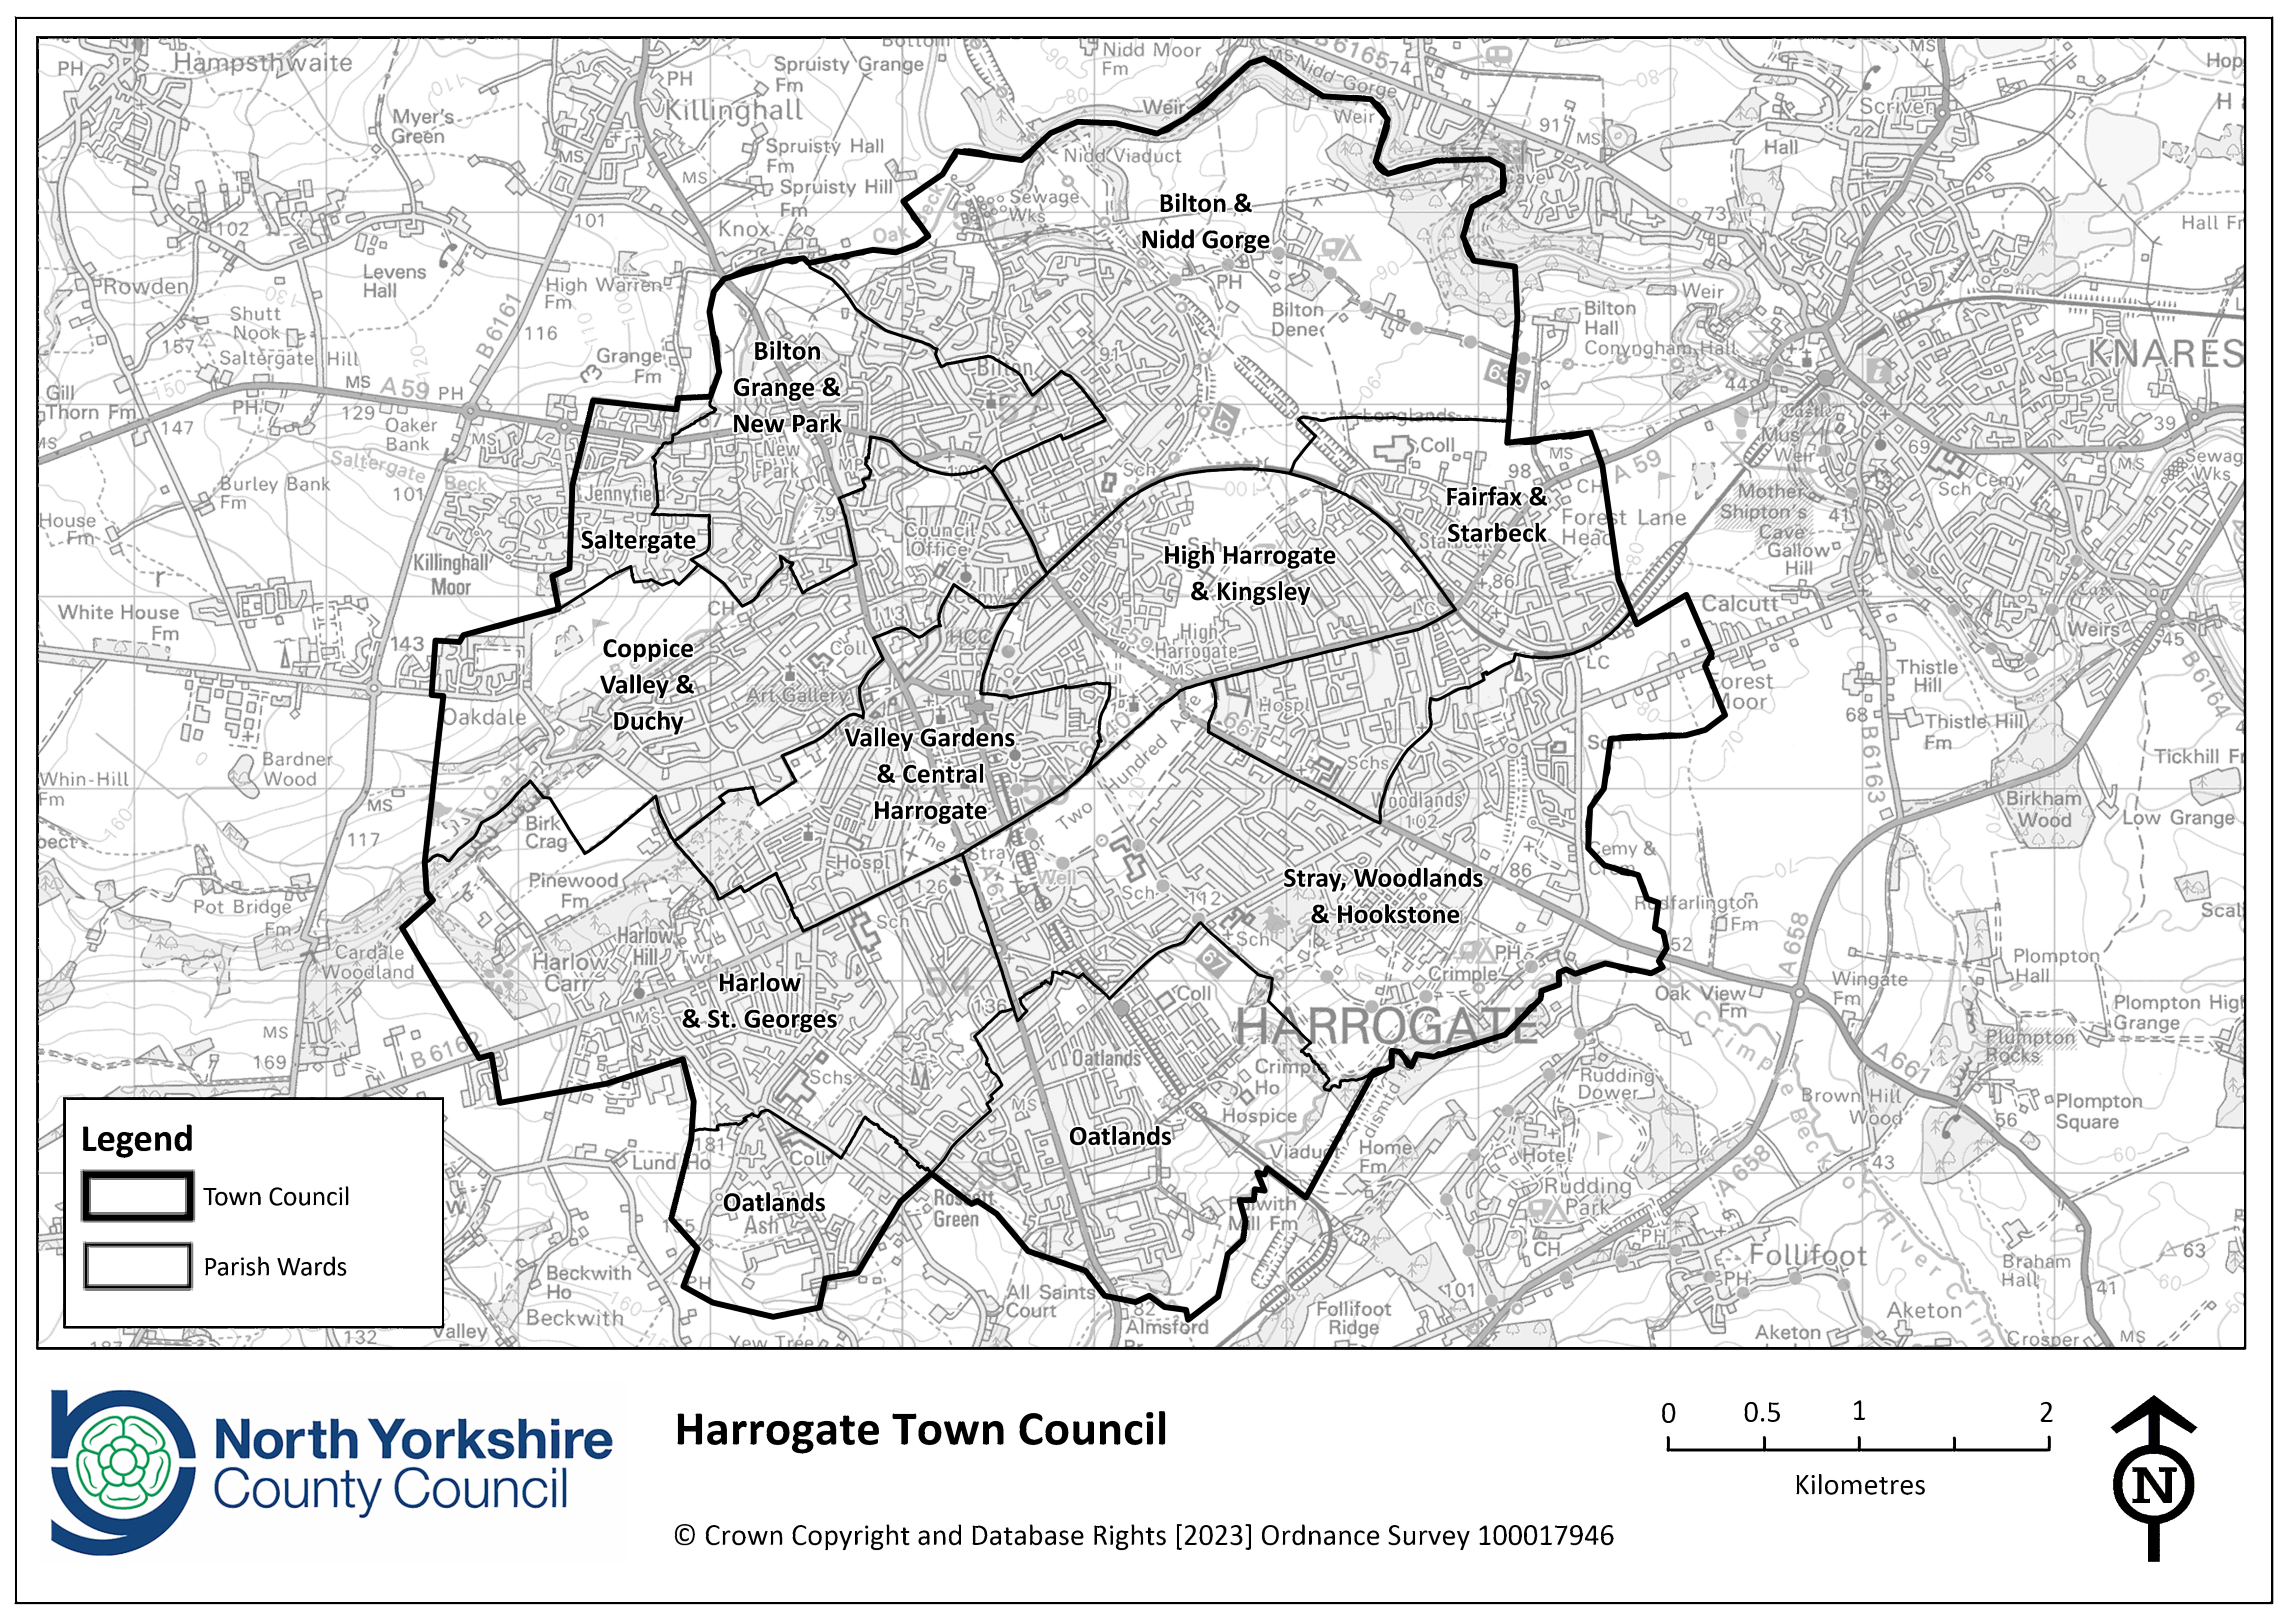 Harrogate town council boundary map